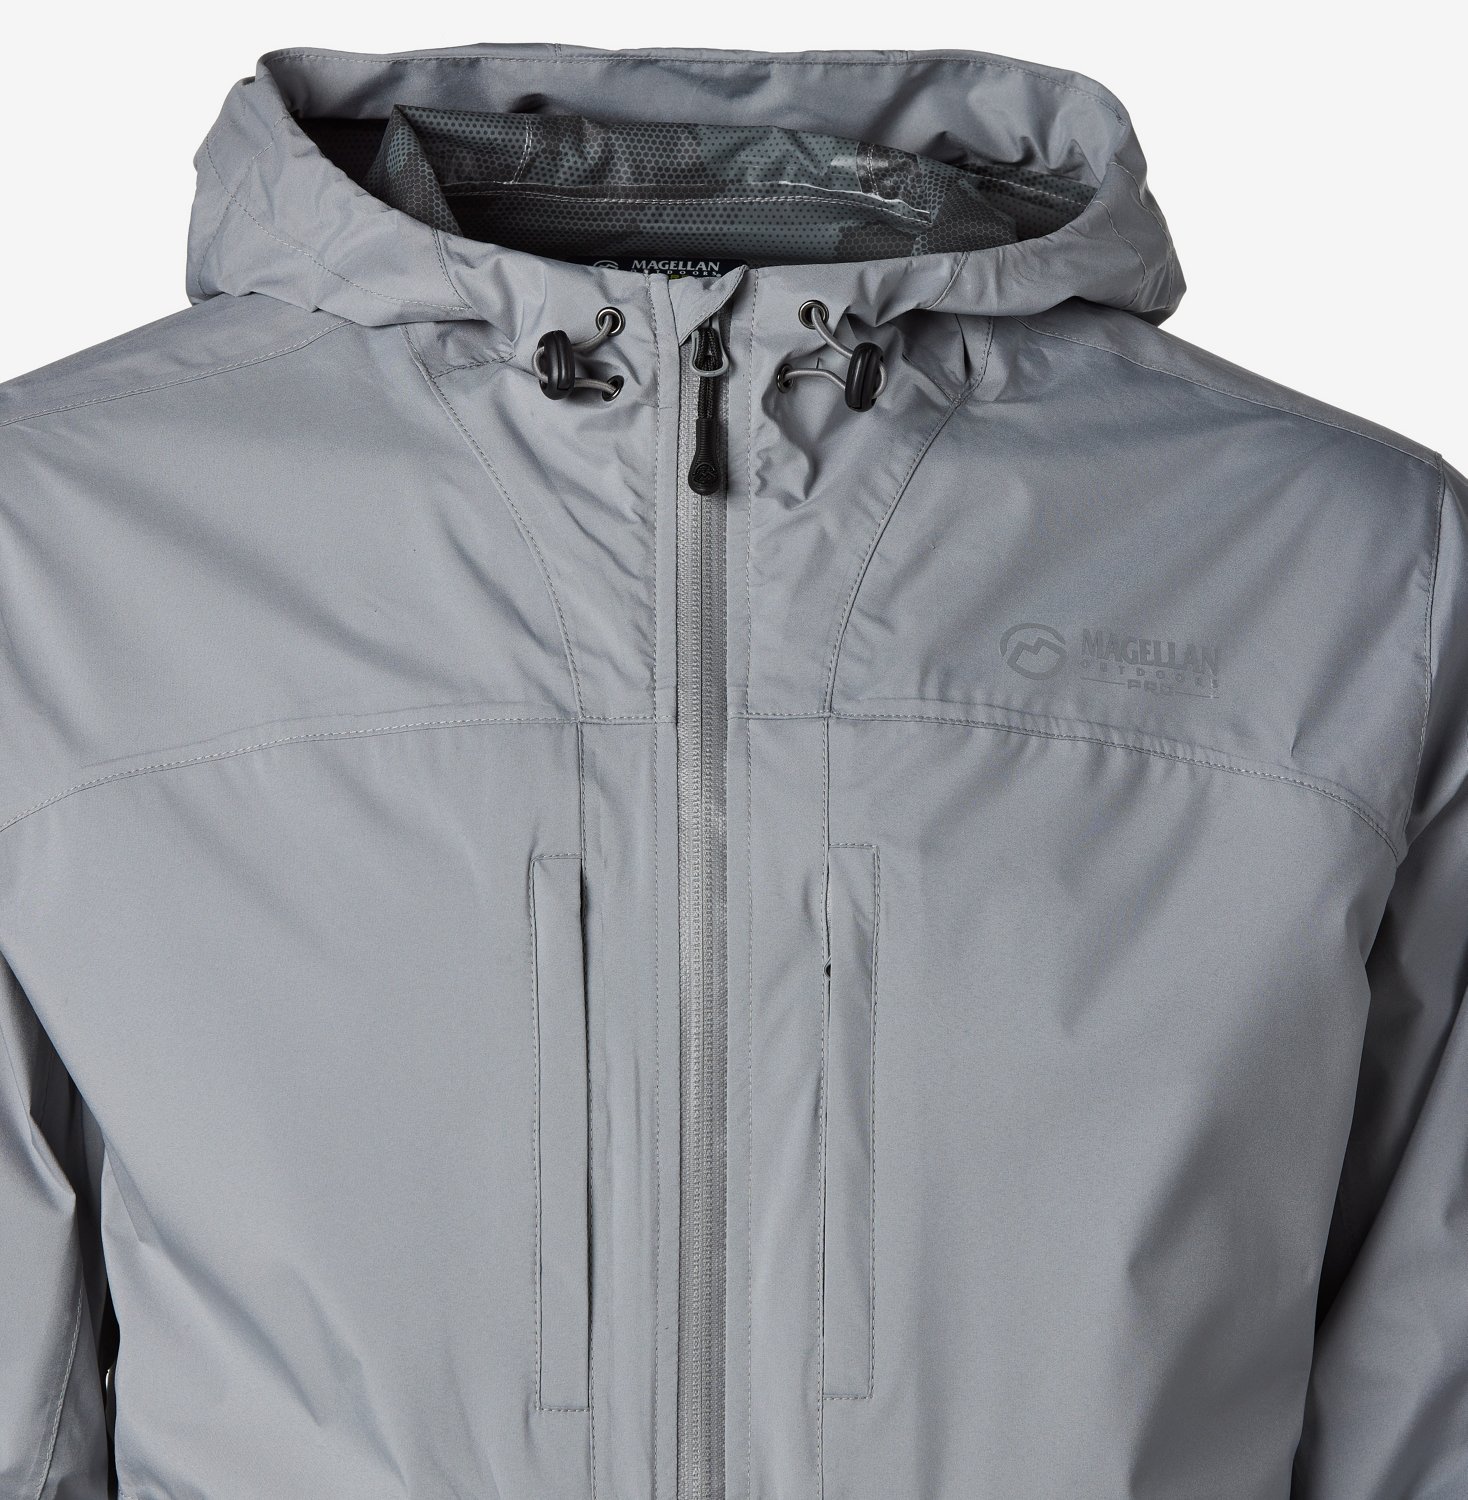 Magellan Outdoors Youth Packable Rain Jacket